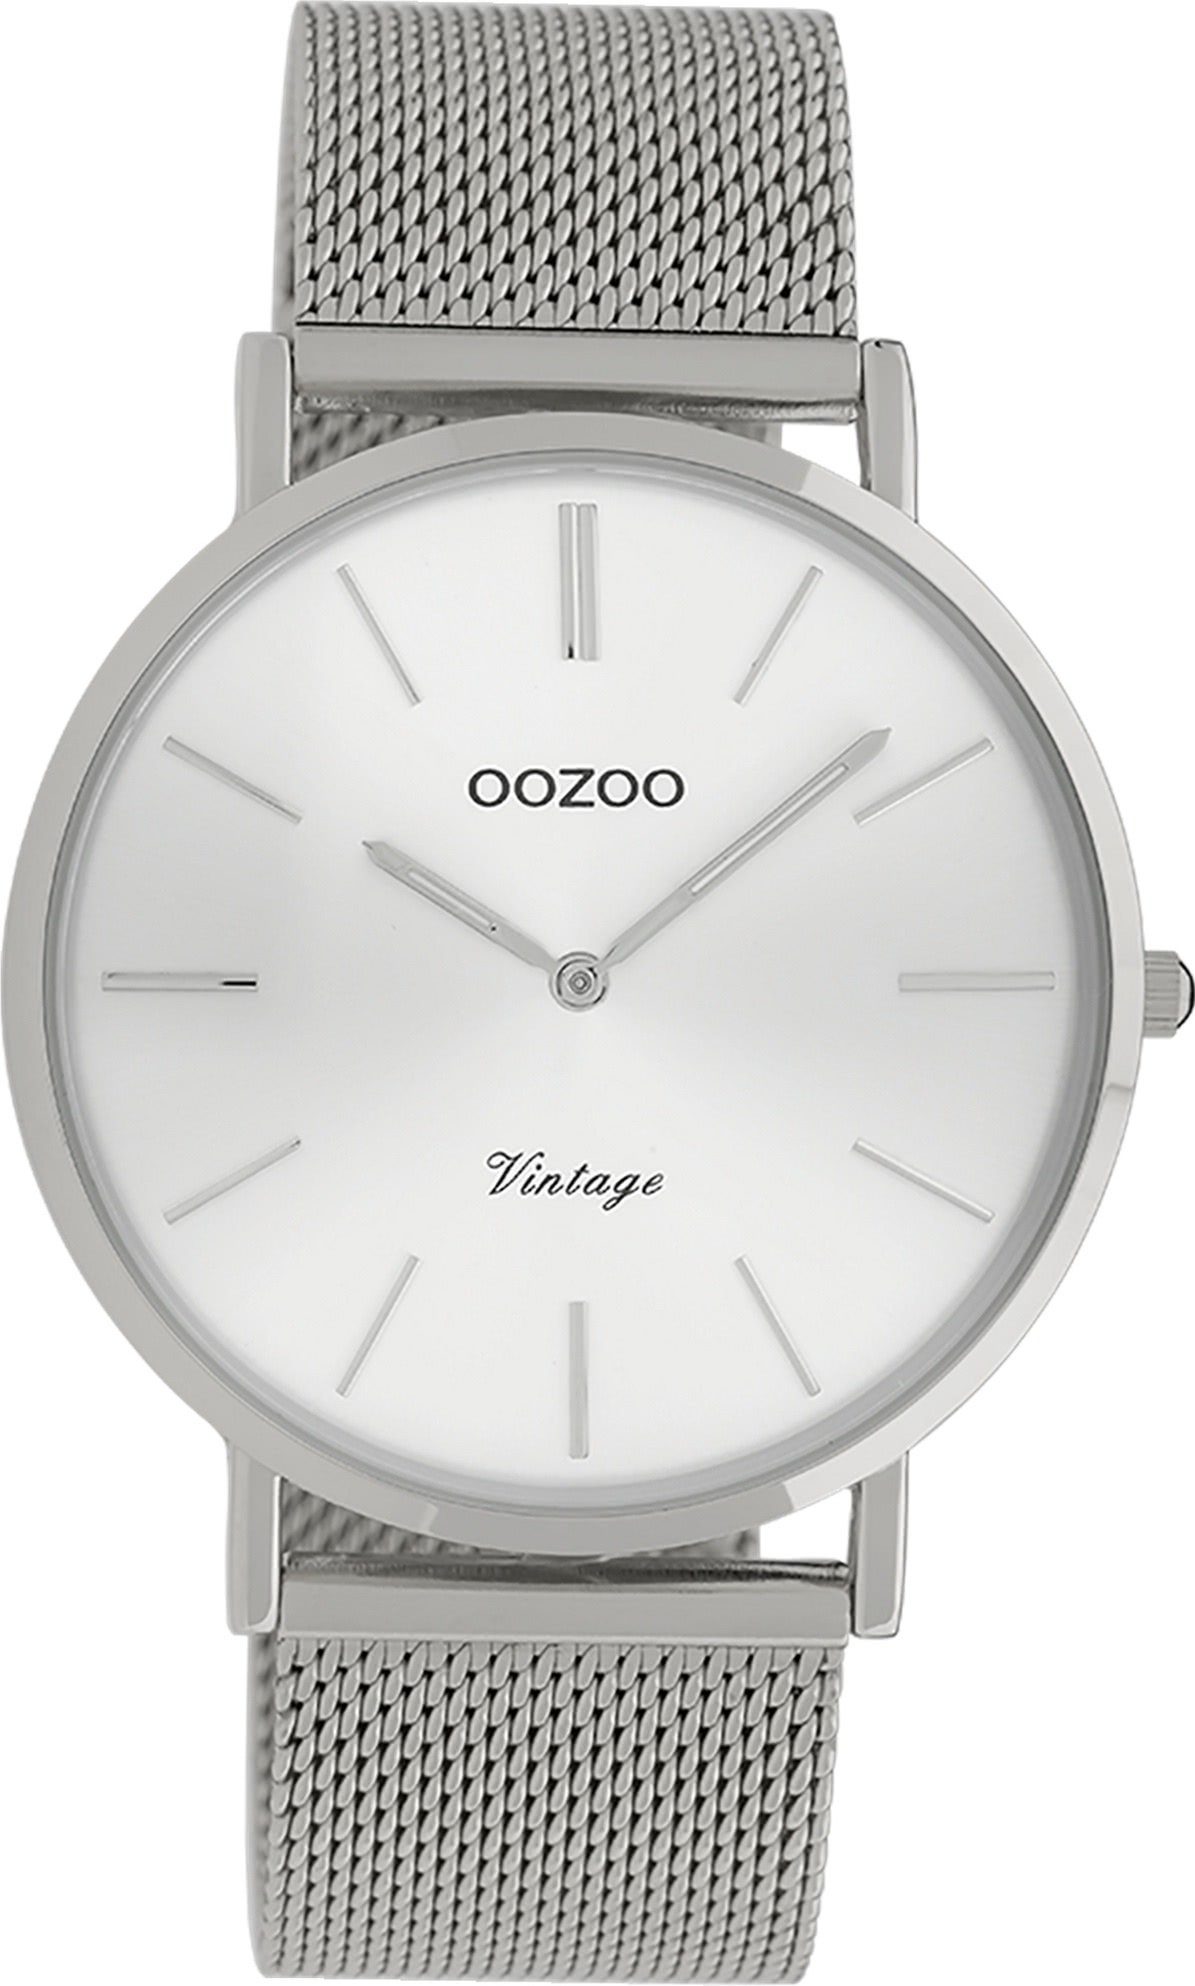 OOZOO Quarzuhr Oozoo Herren Armbanduhr silber Analog, Herrenuhr rund, groß (ca. 40mm) Edelstahlarmband, Fashion-Style | Quarzuhren